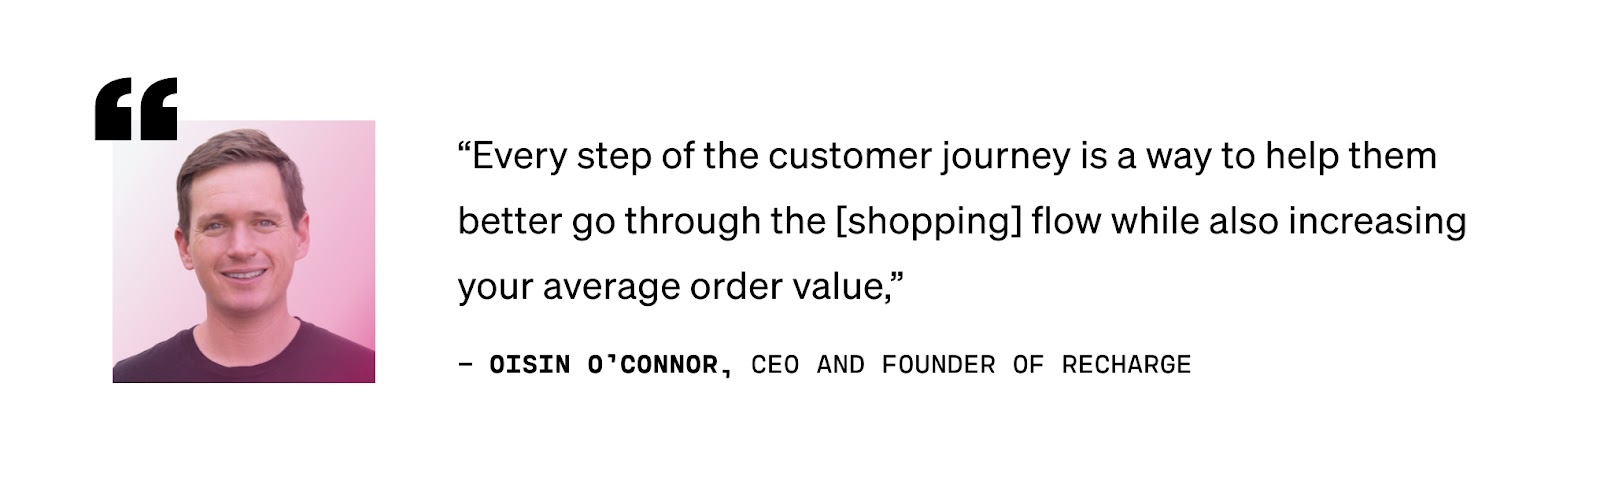 Oisin O'Connor on the customer journey